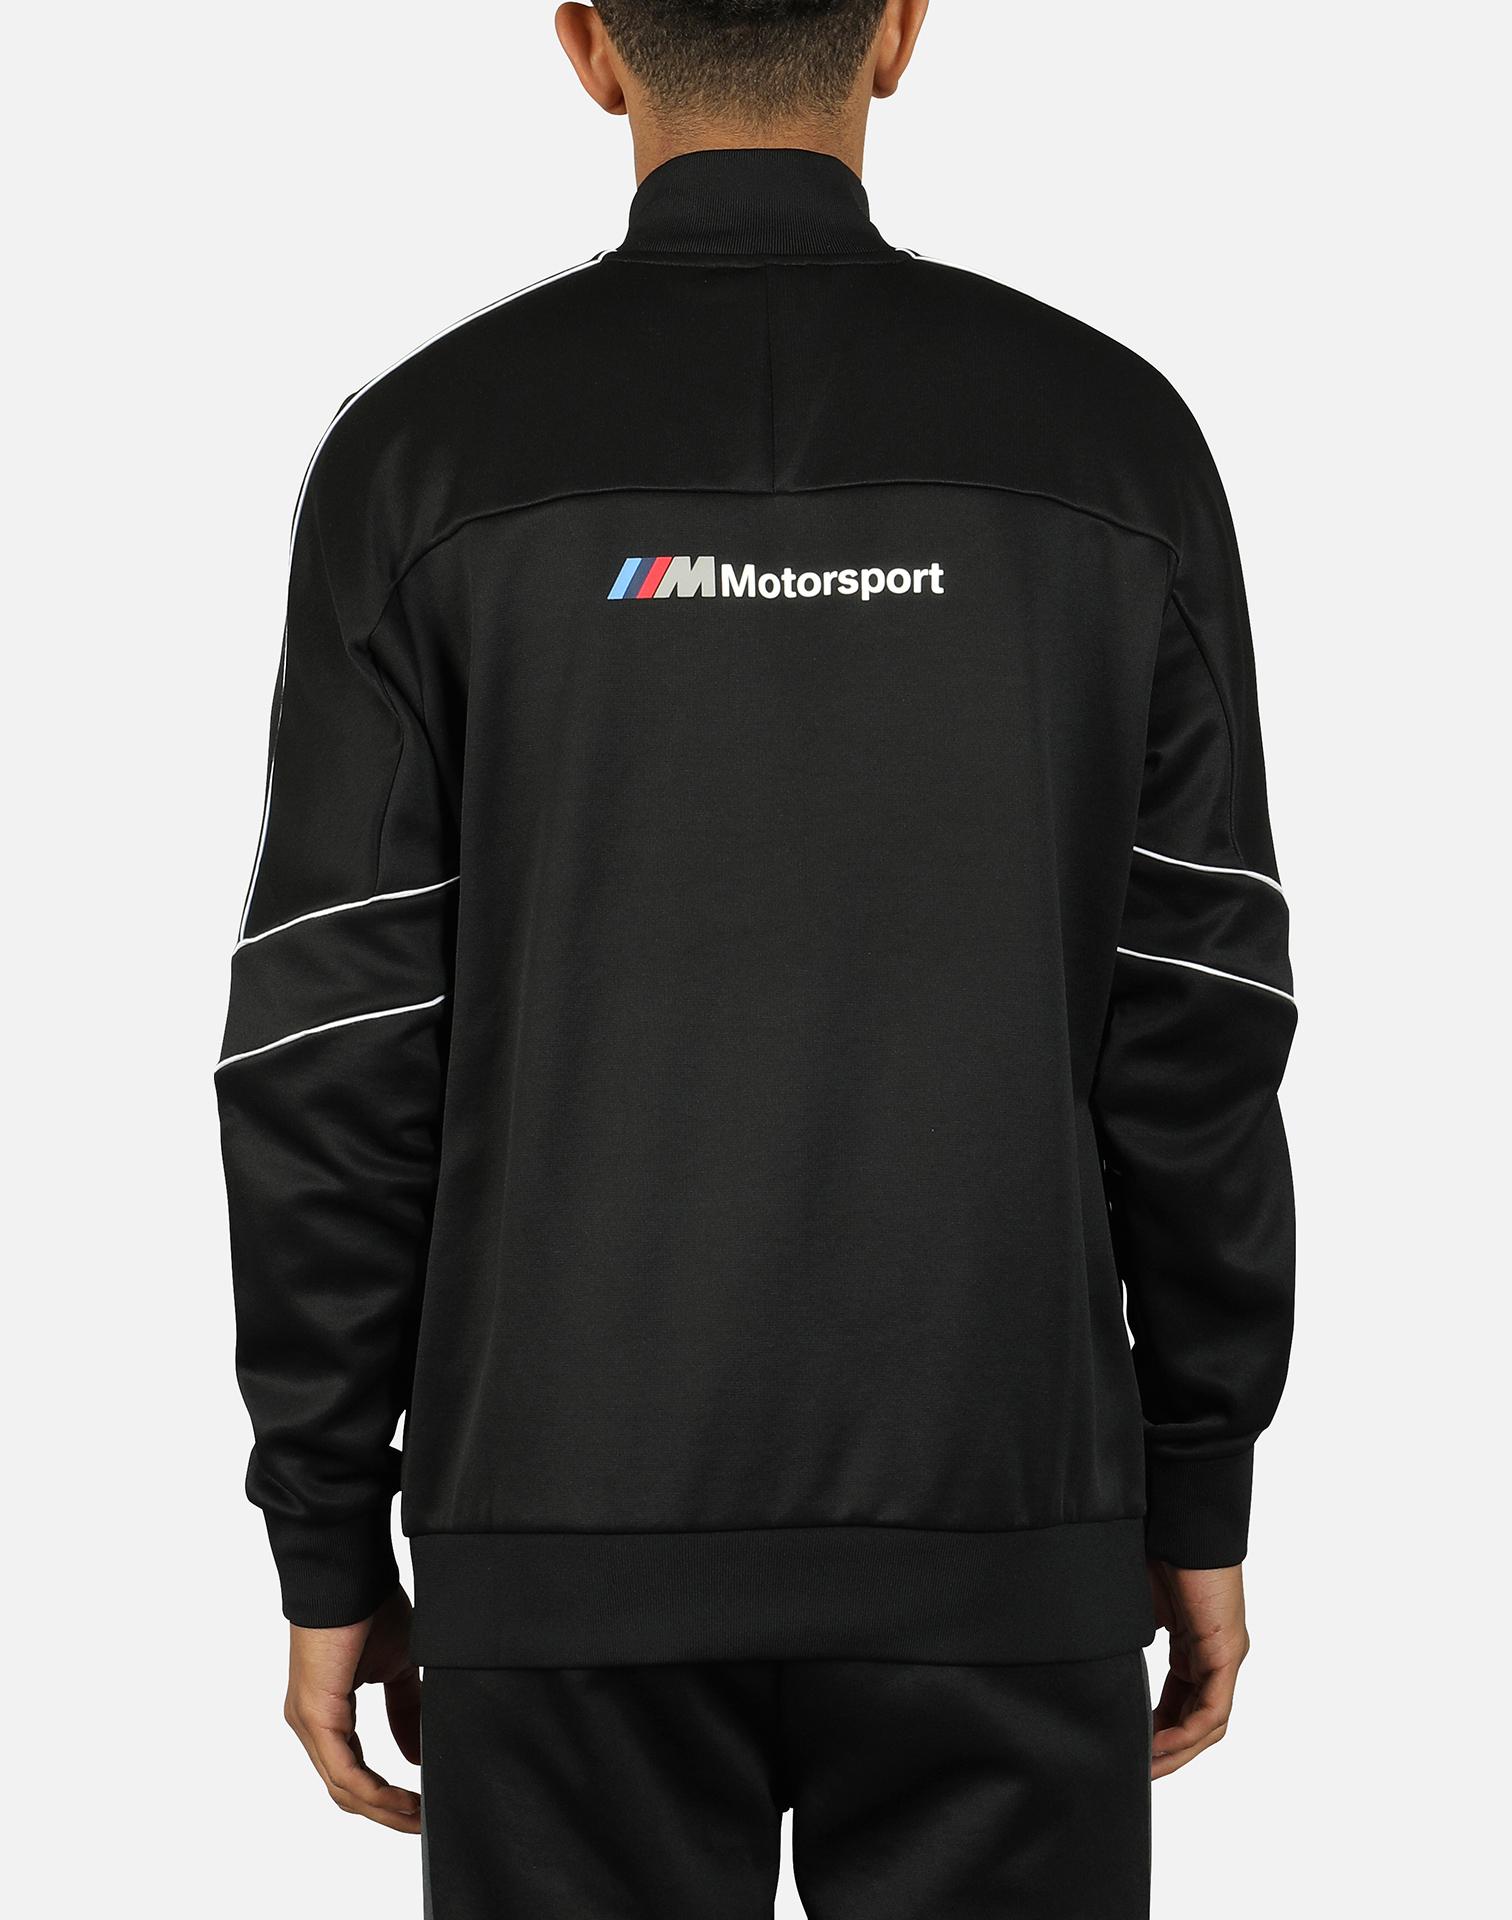 PUMA Synthetic Bmw Motorsport T7 Track Jacket in Black for Men - Lyst